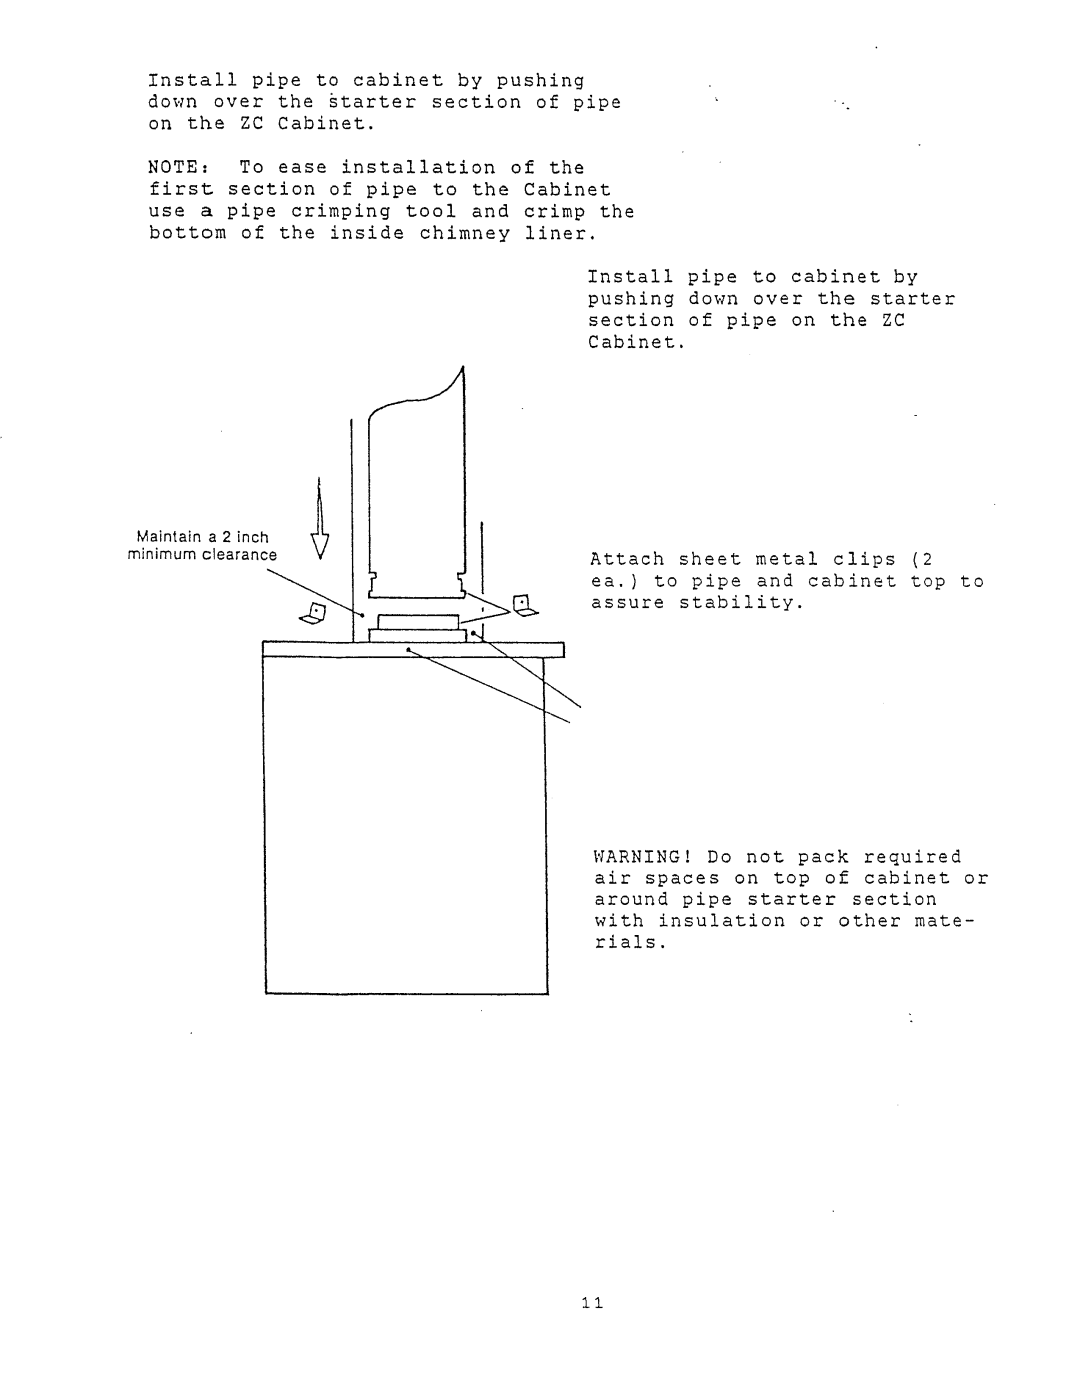 New Buck Corporation 80ZC manual Attach sheet metal clips 